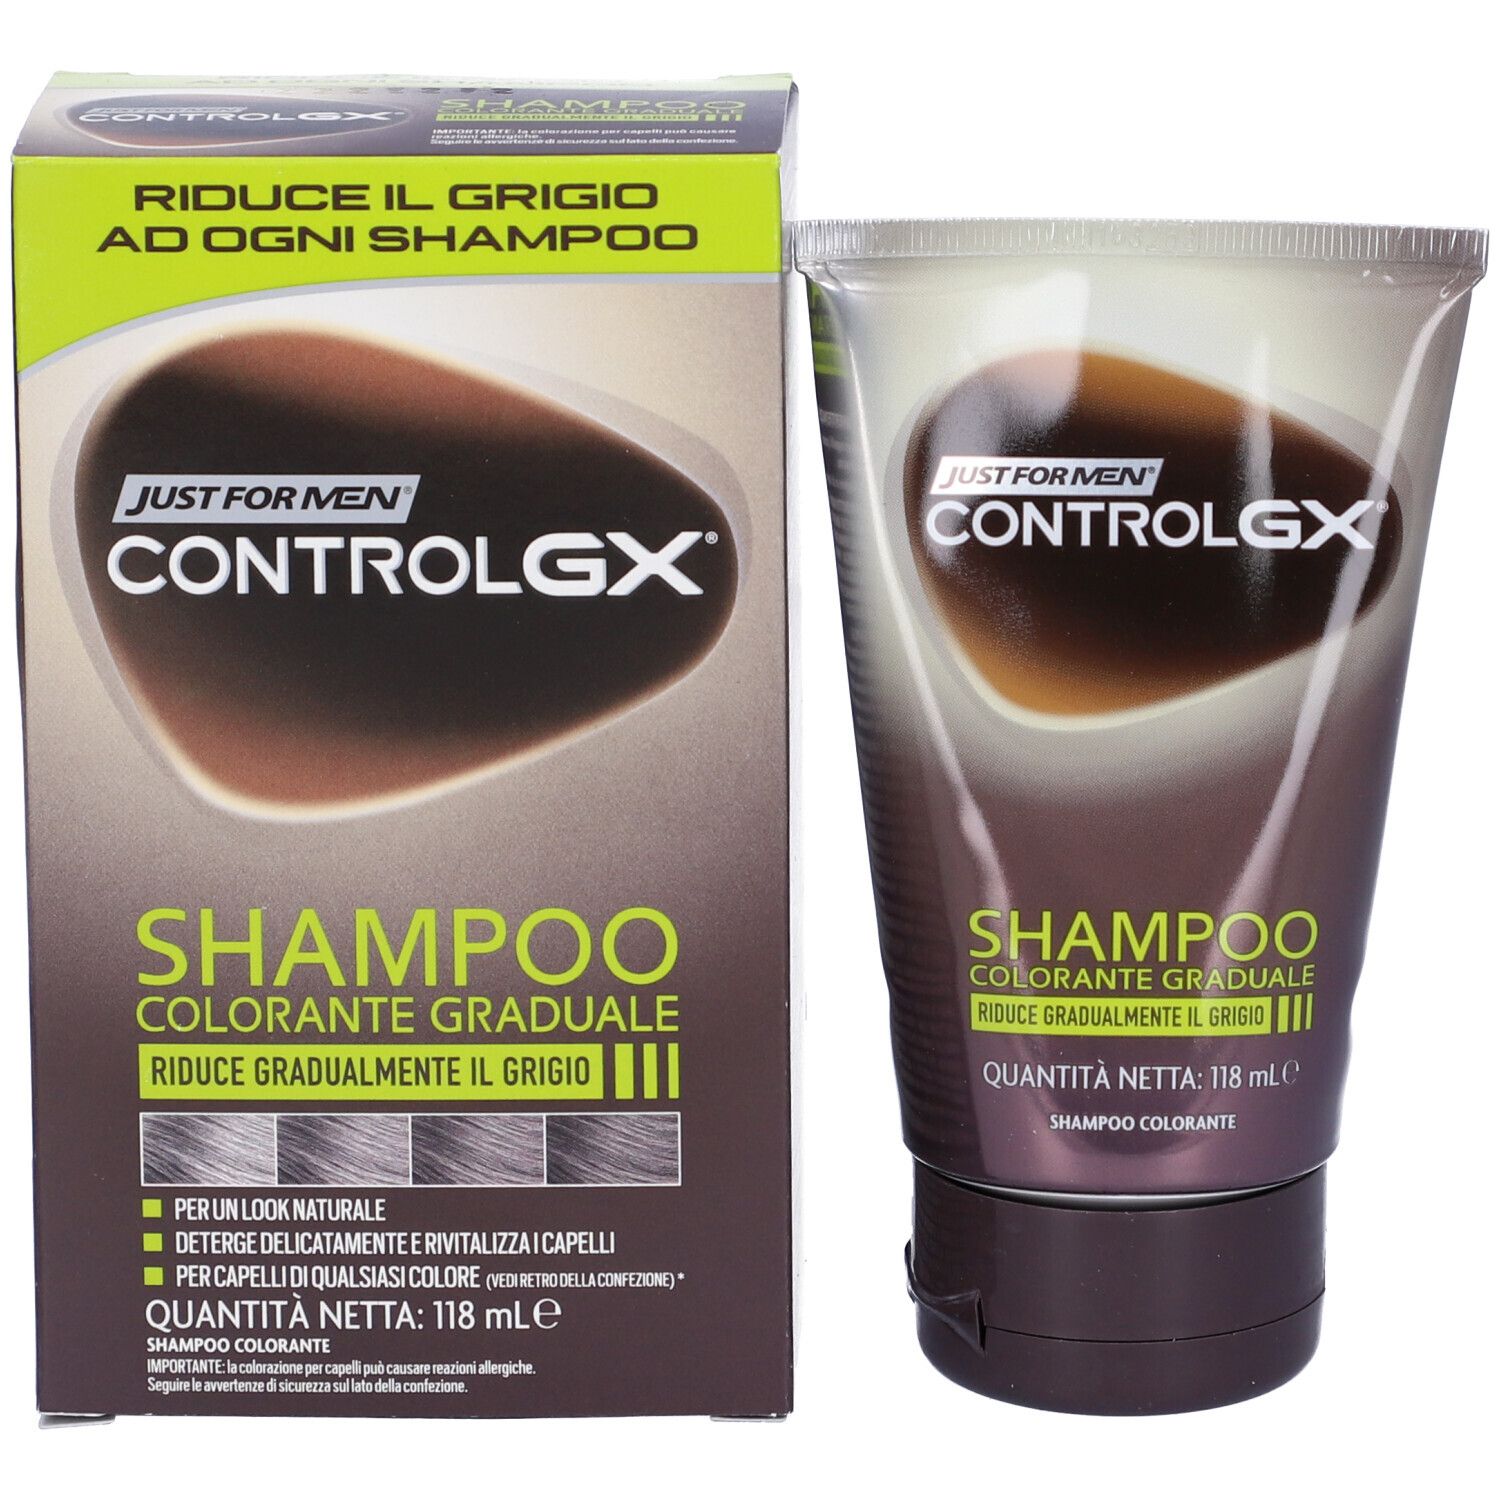 Just For Men Controlgx Shampoo Colorante Graduale